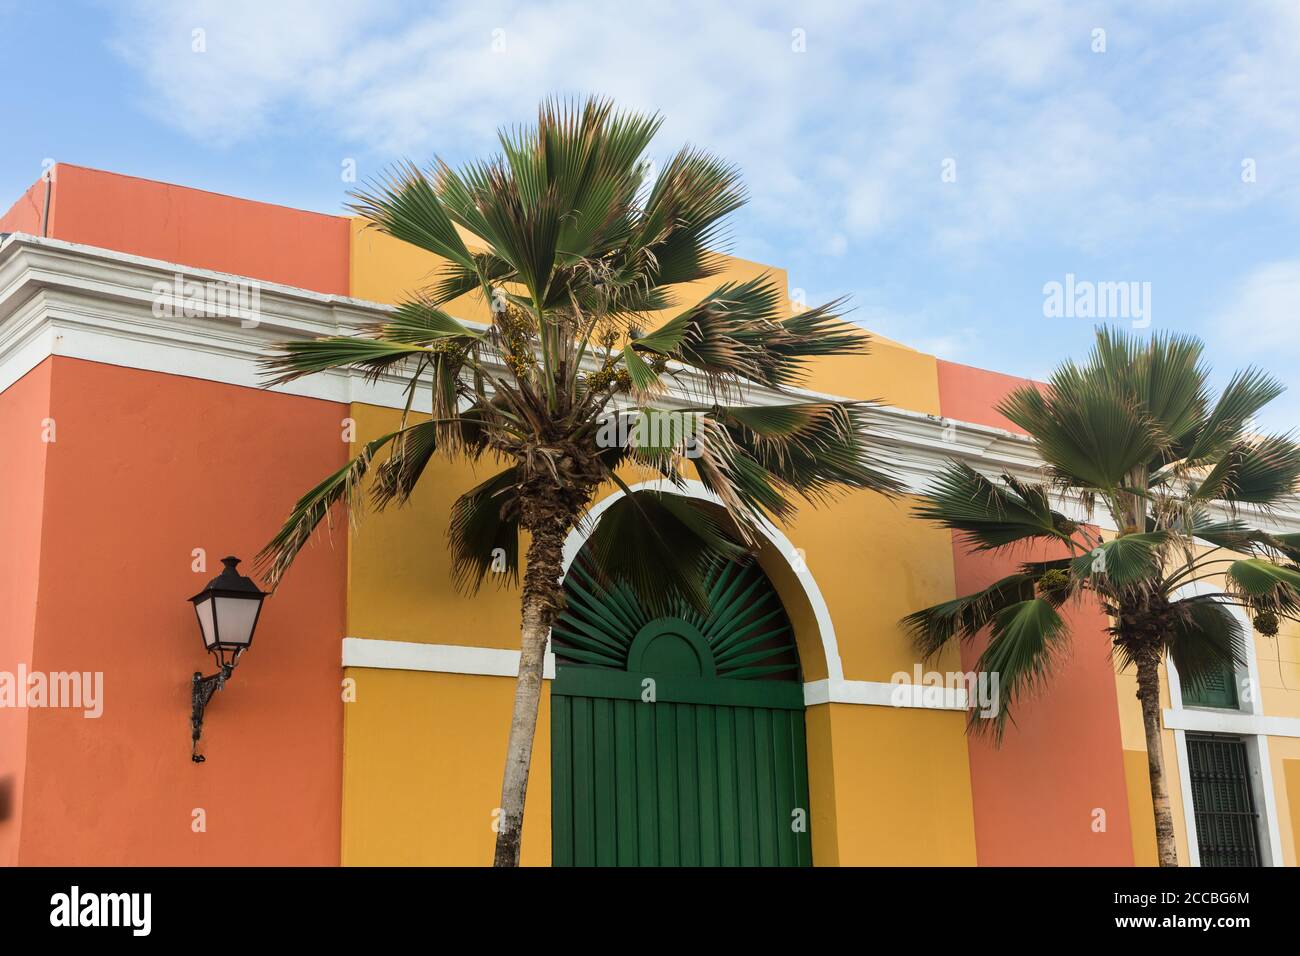 Bunt bemalte Häuser in der historischen Kolonialstadt Old San Juan, Puerto Rico. Stockfoto